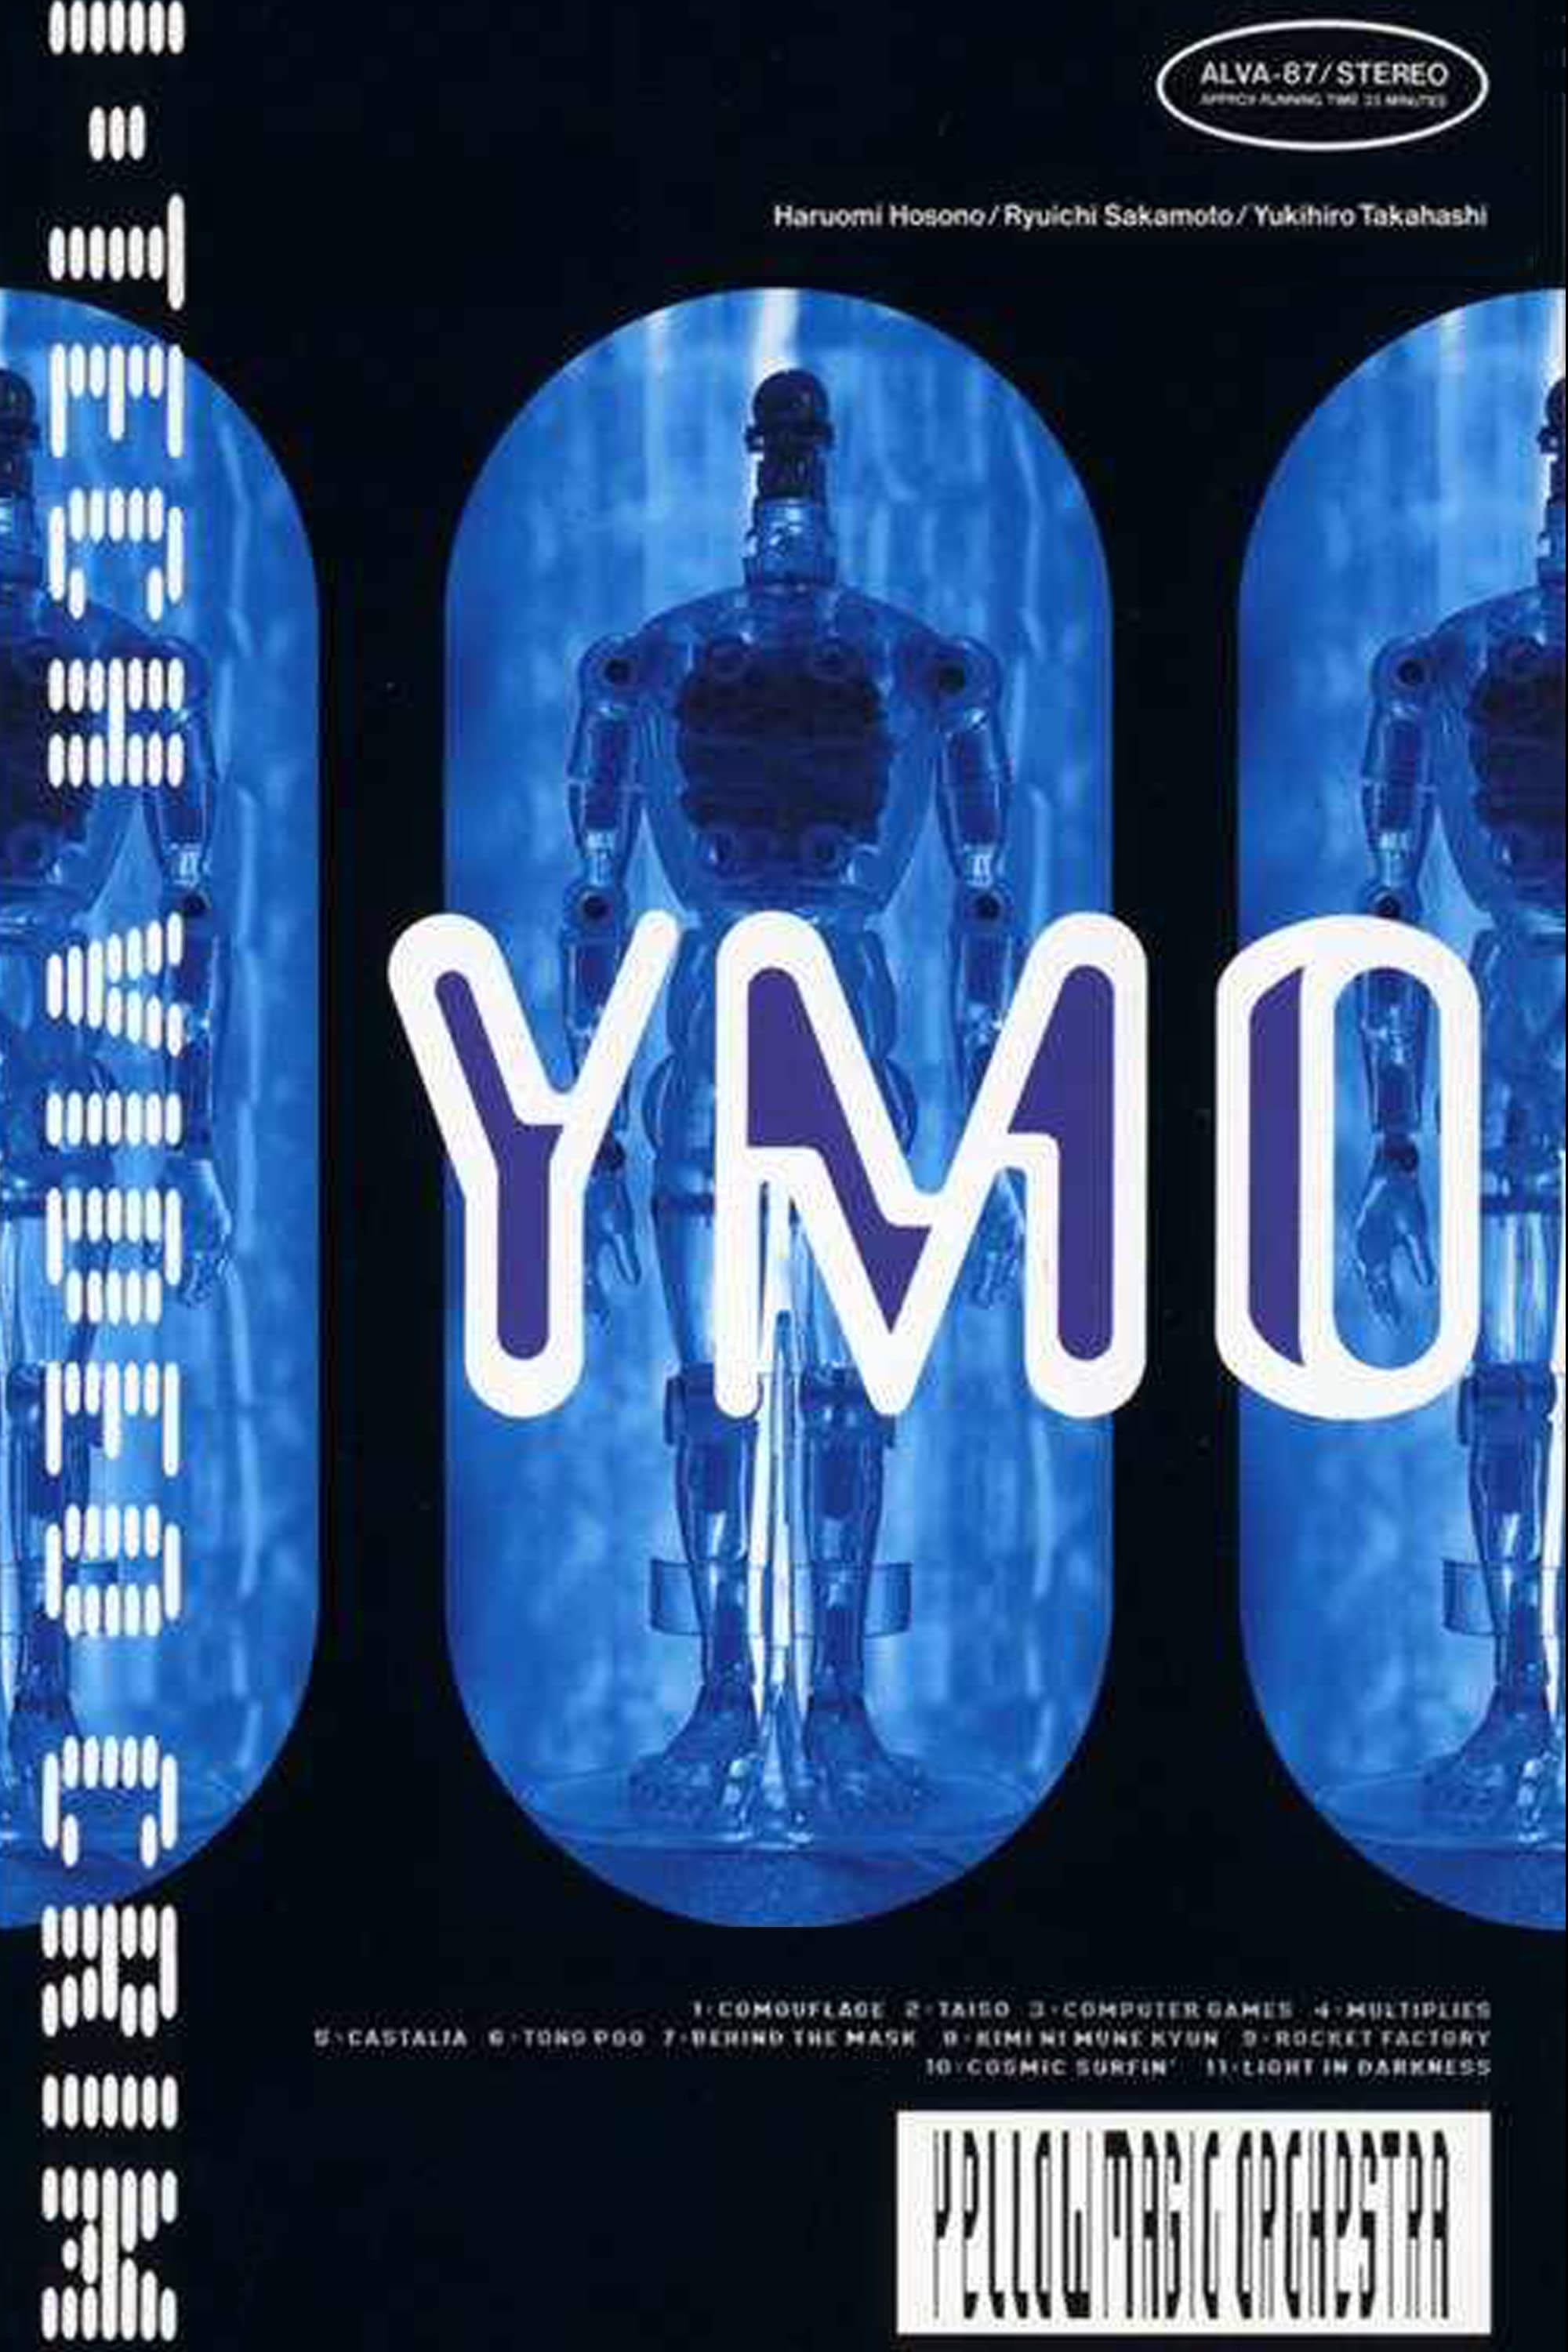 YMO – Hi-Tech Video Crime